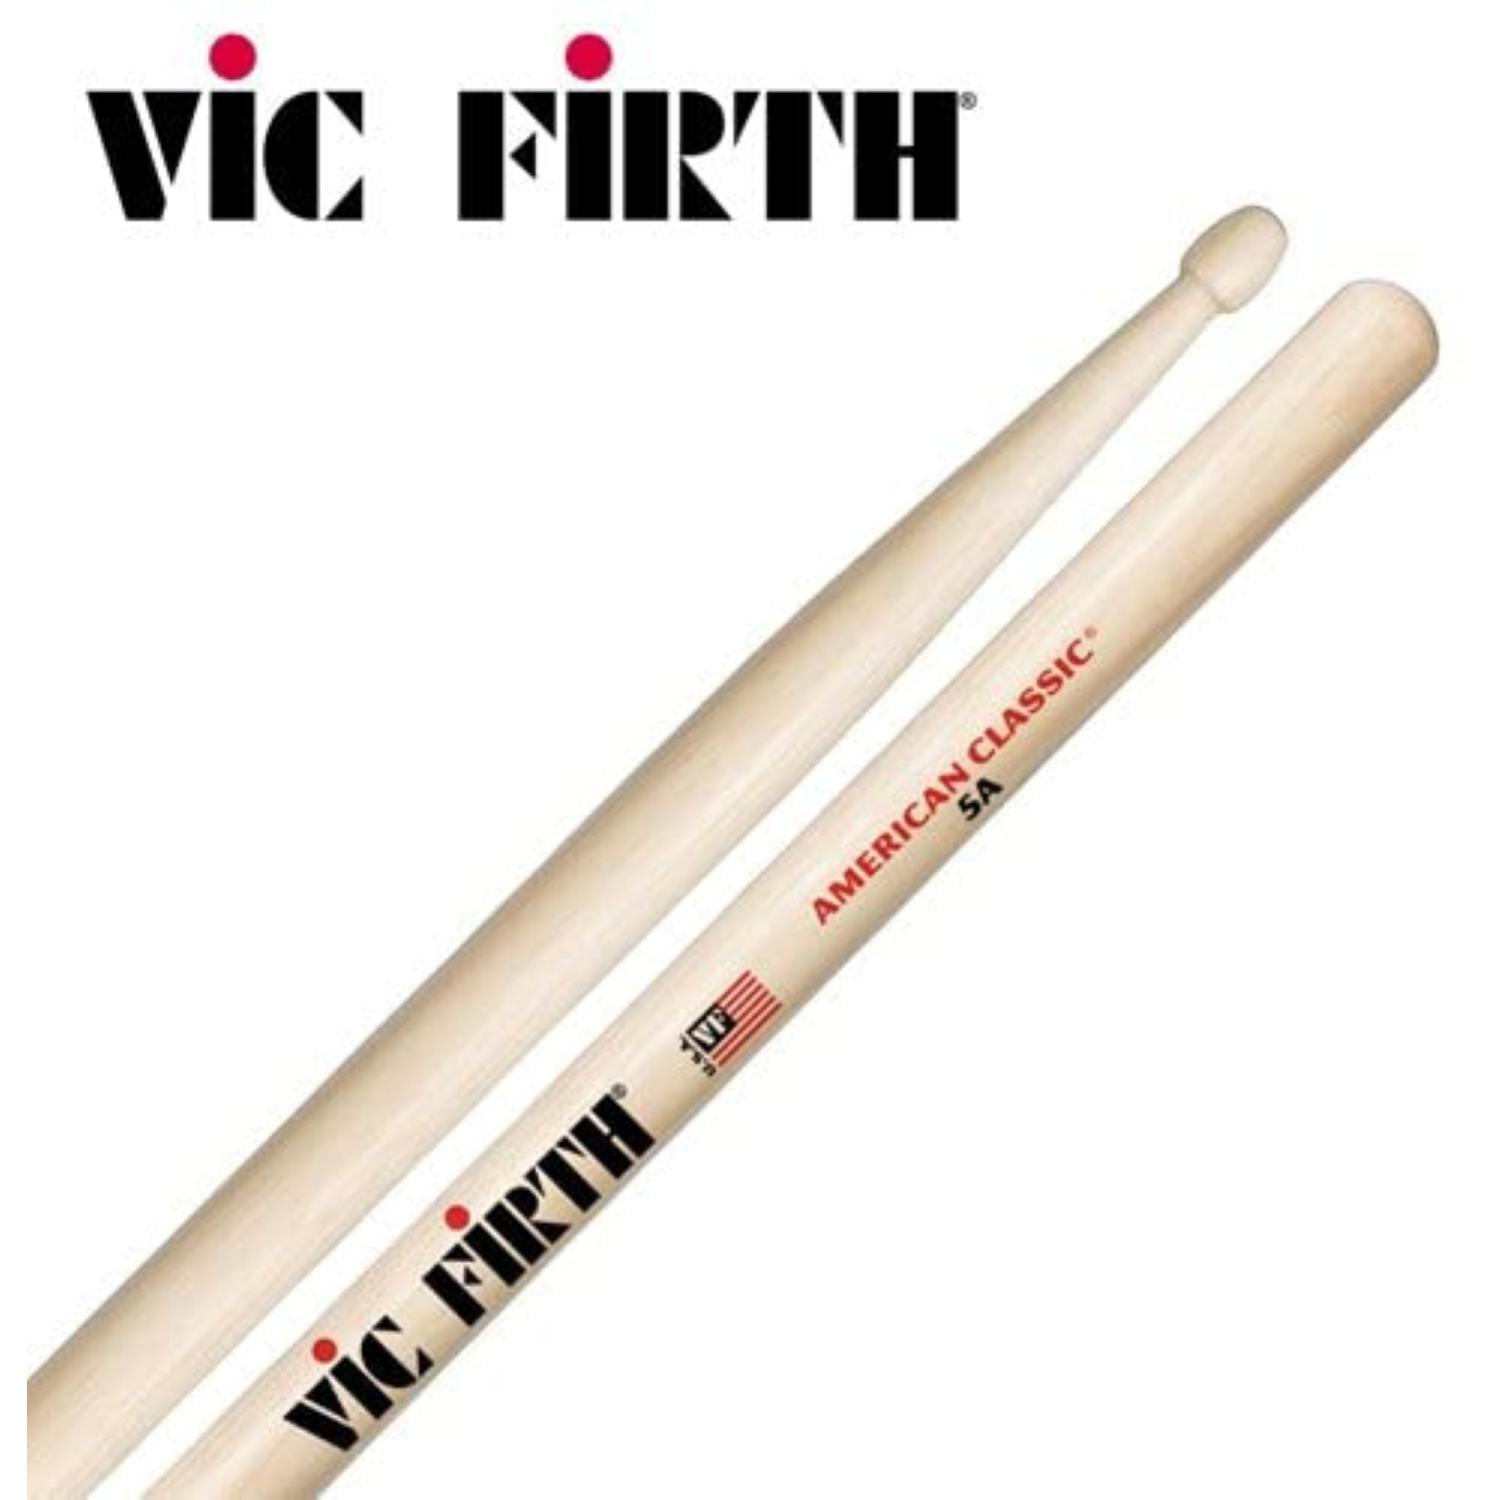 VIC FIRTH American Classic 5A Bacchette per Batteria 